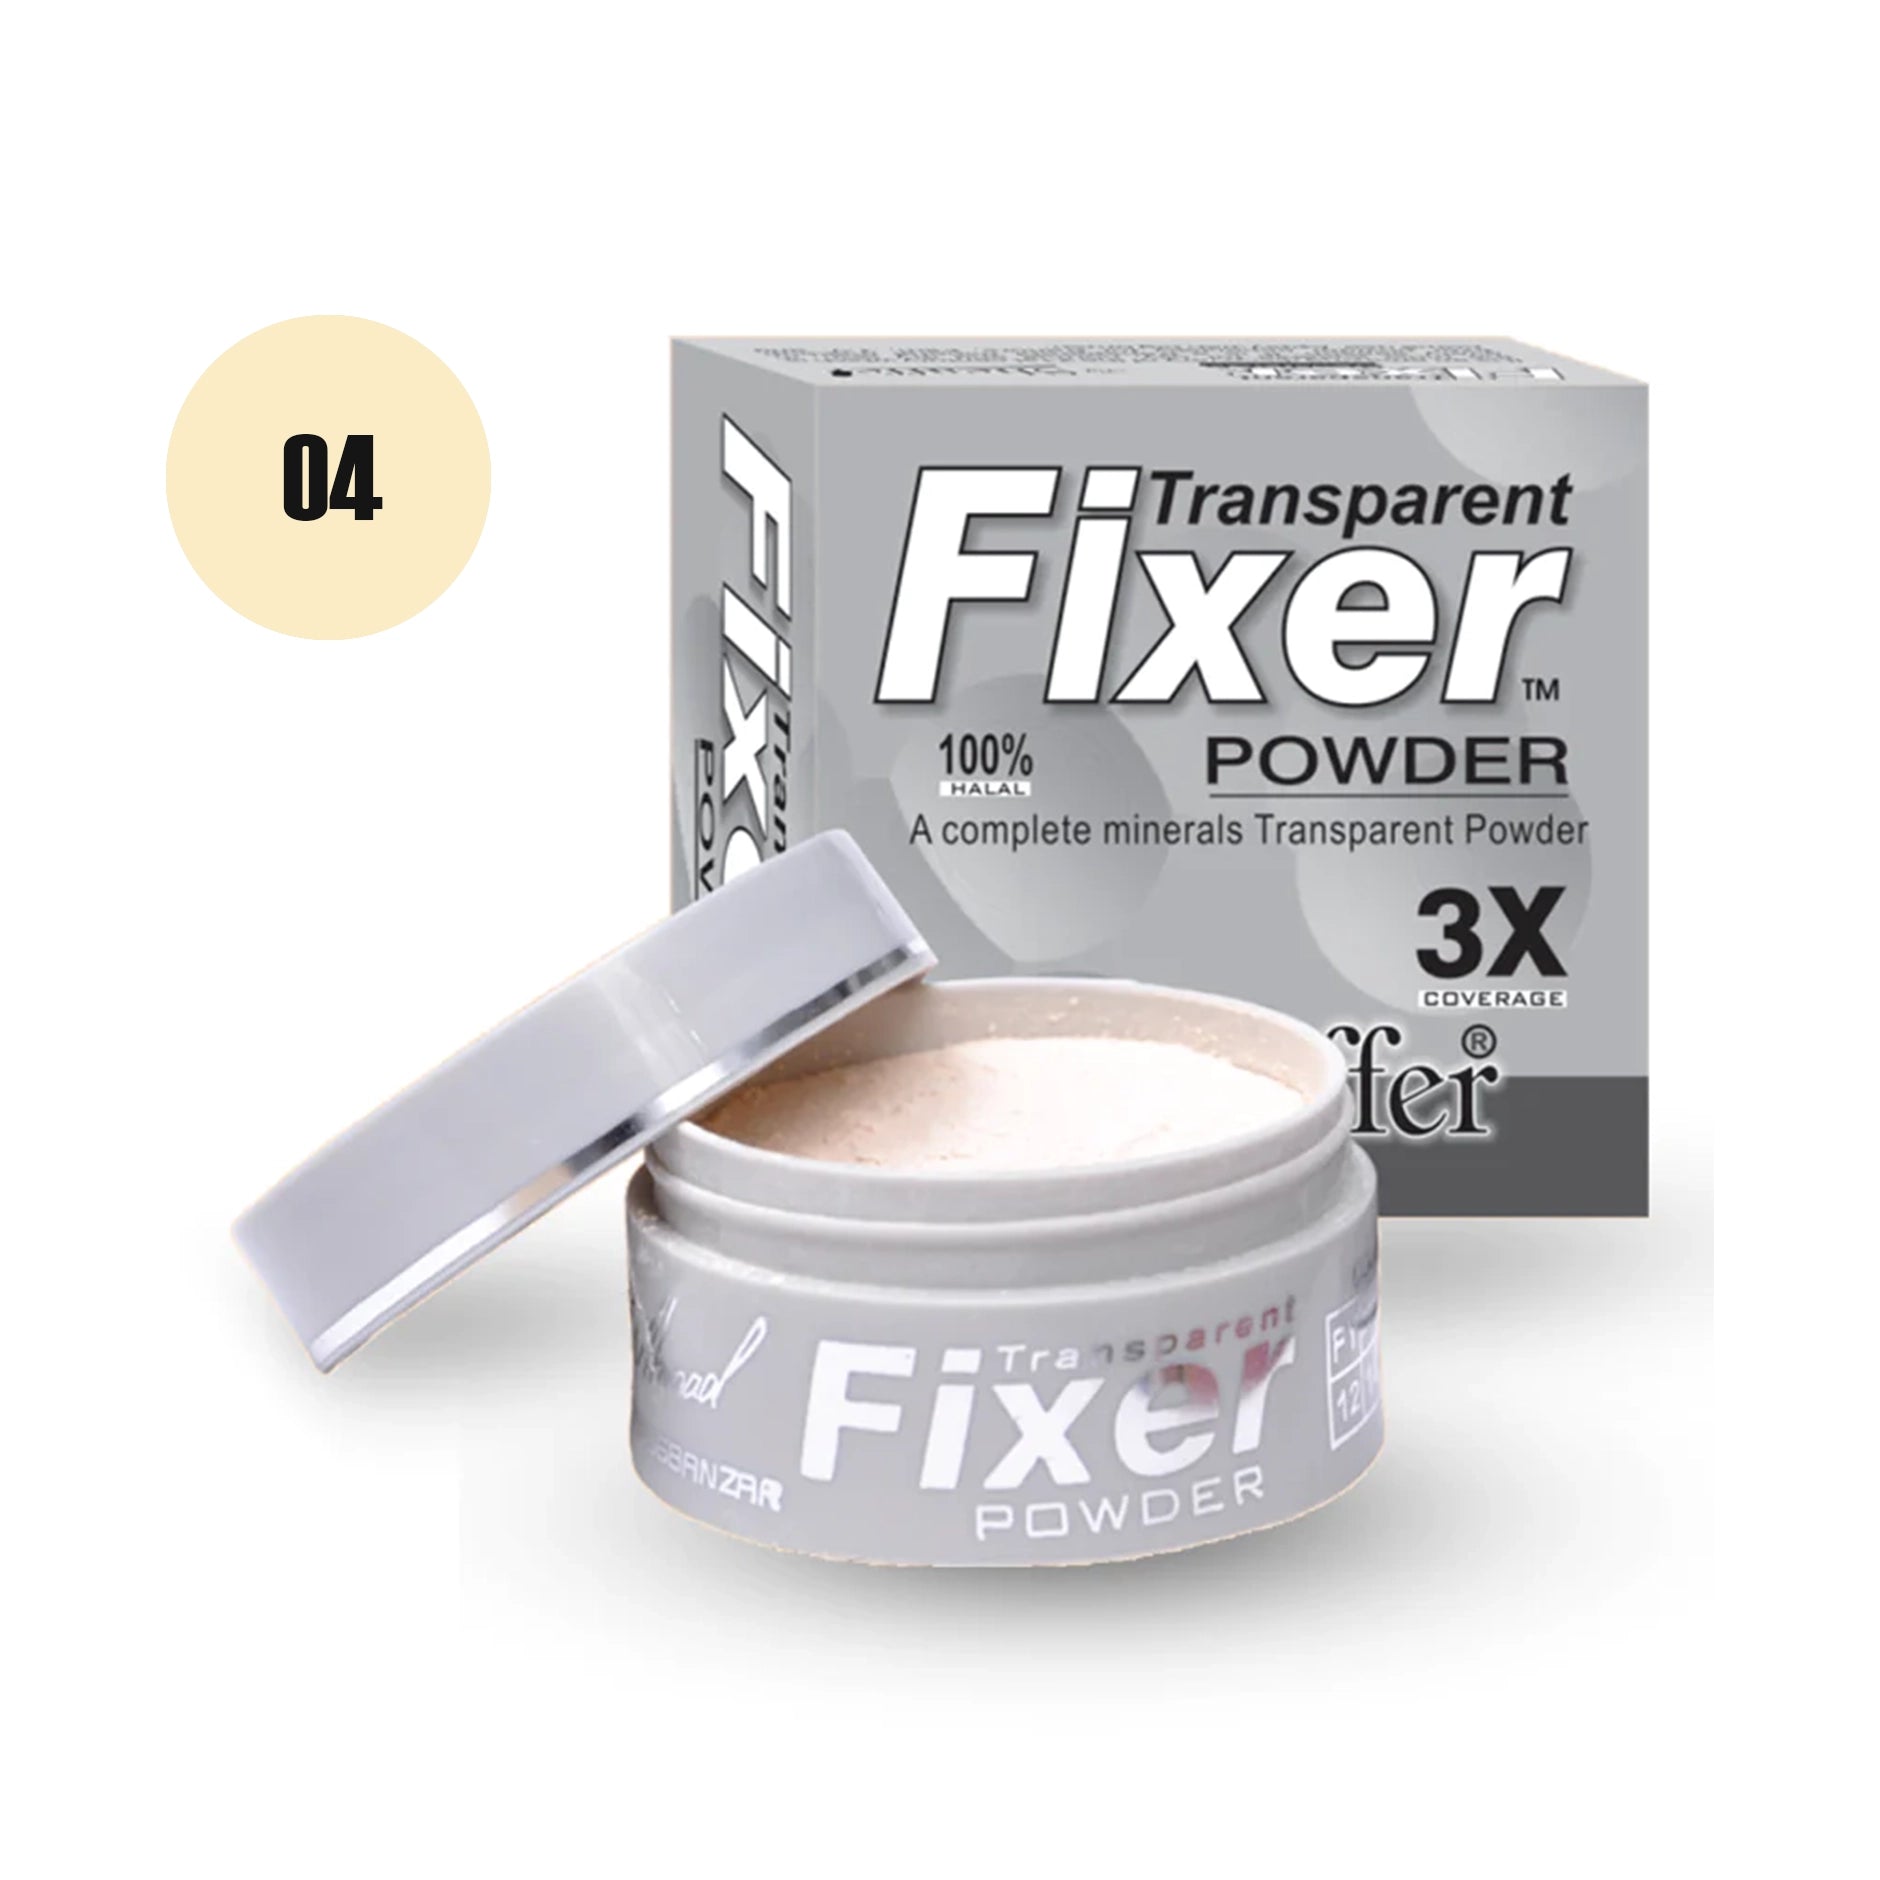 Sheaffer Transparent Fixer Powder Ivory Shade - Retailershop - Online Shopping Center